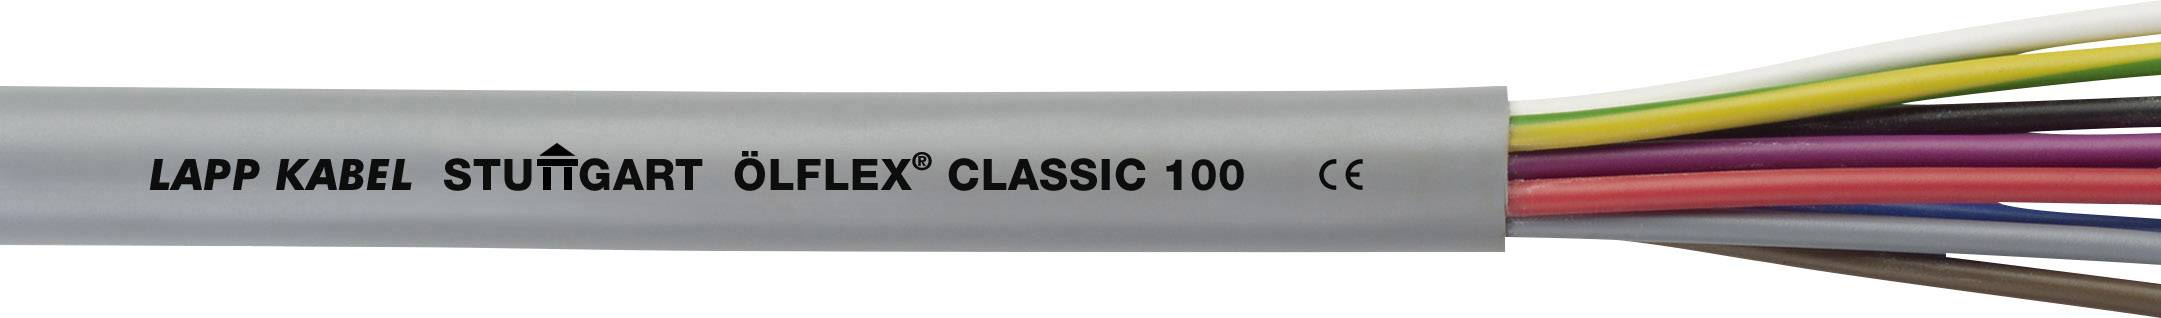 LAPP KABEL Steuerleitung ÖLFLEX® CLASSIC 100 4 G 4 mm² Grau LappKabel 1120807/1000 1000 m